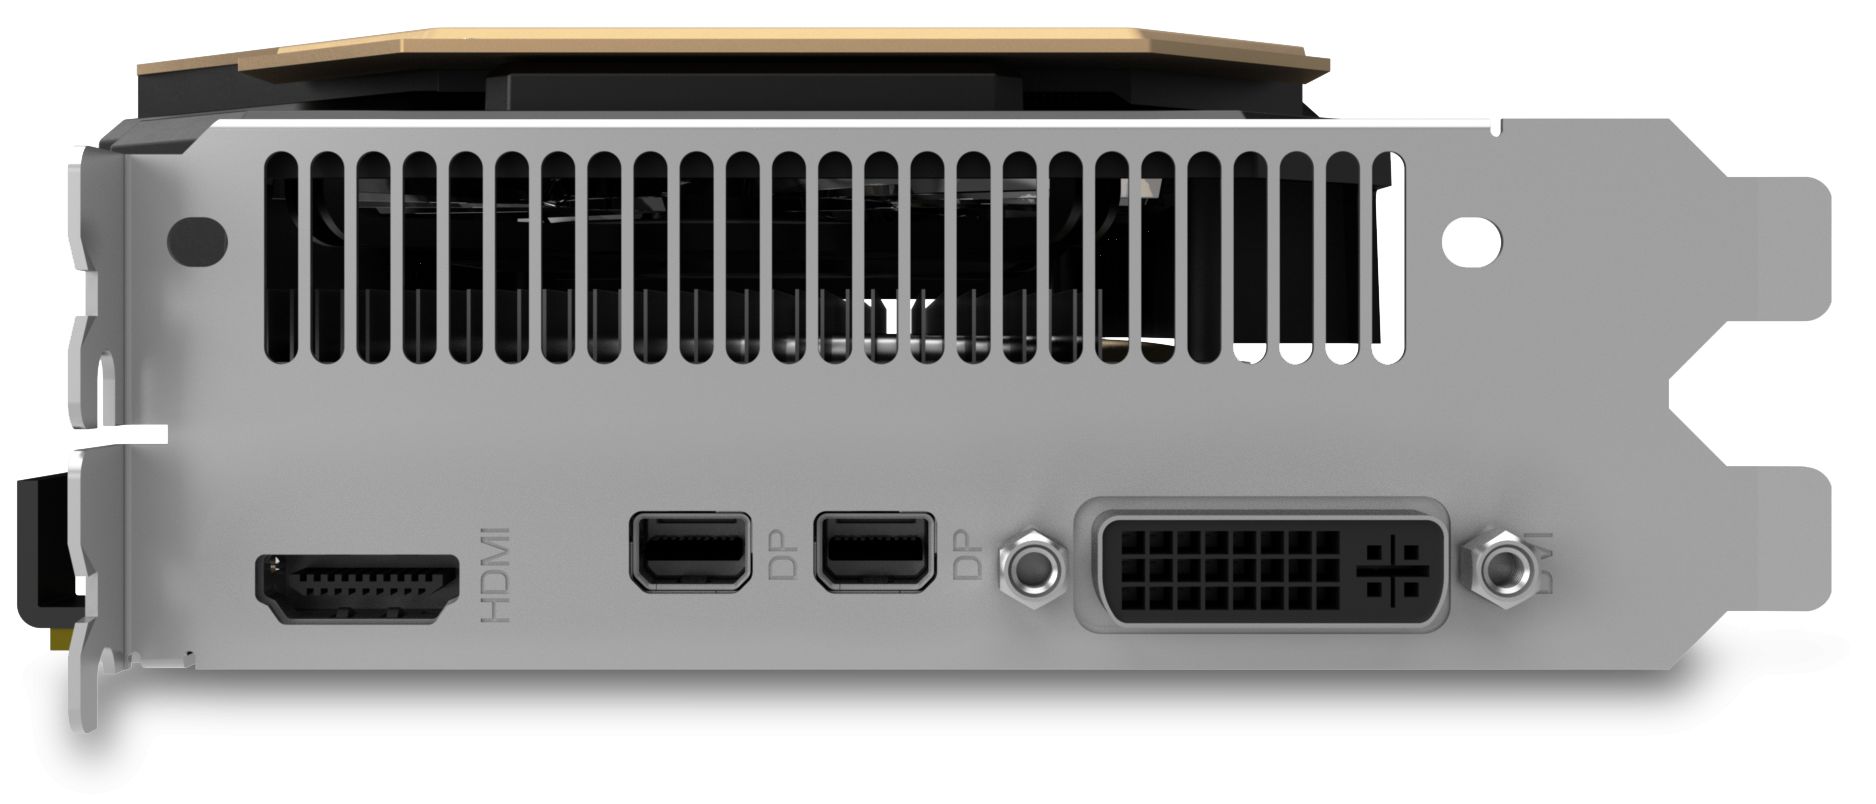 Geforce GTX 970 Jetstream 4GB GDDR5 Graphics Card NE5X970H16G2-2043J